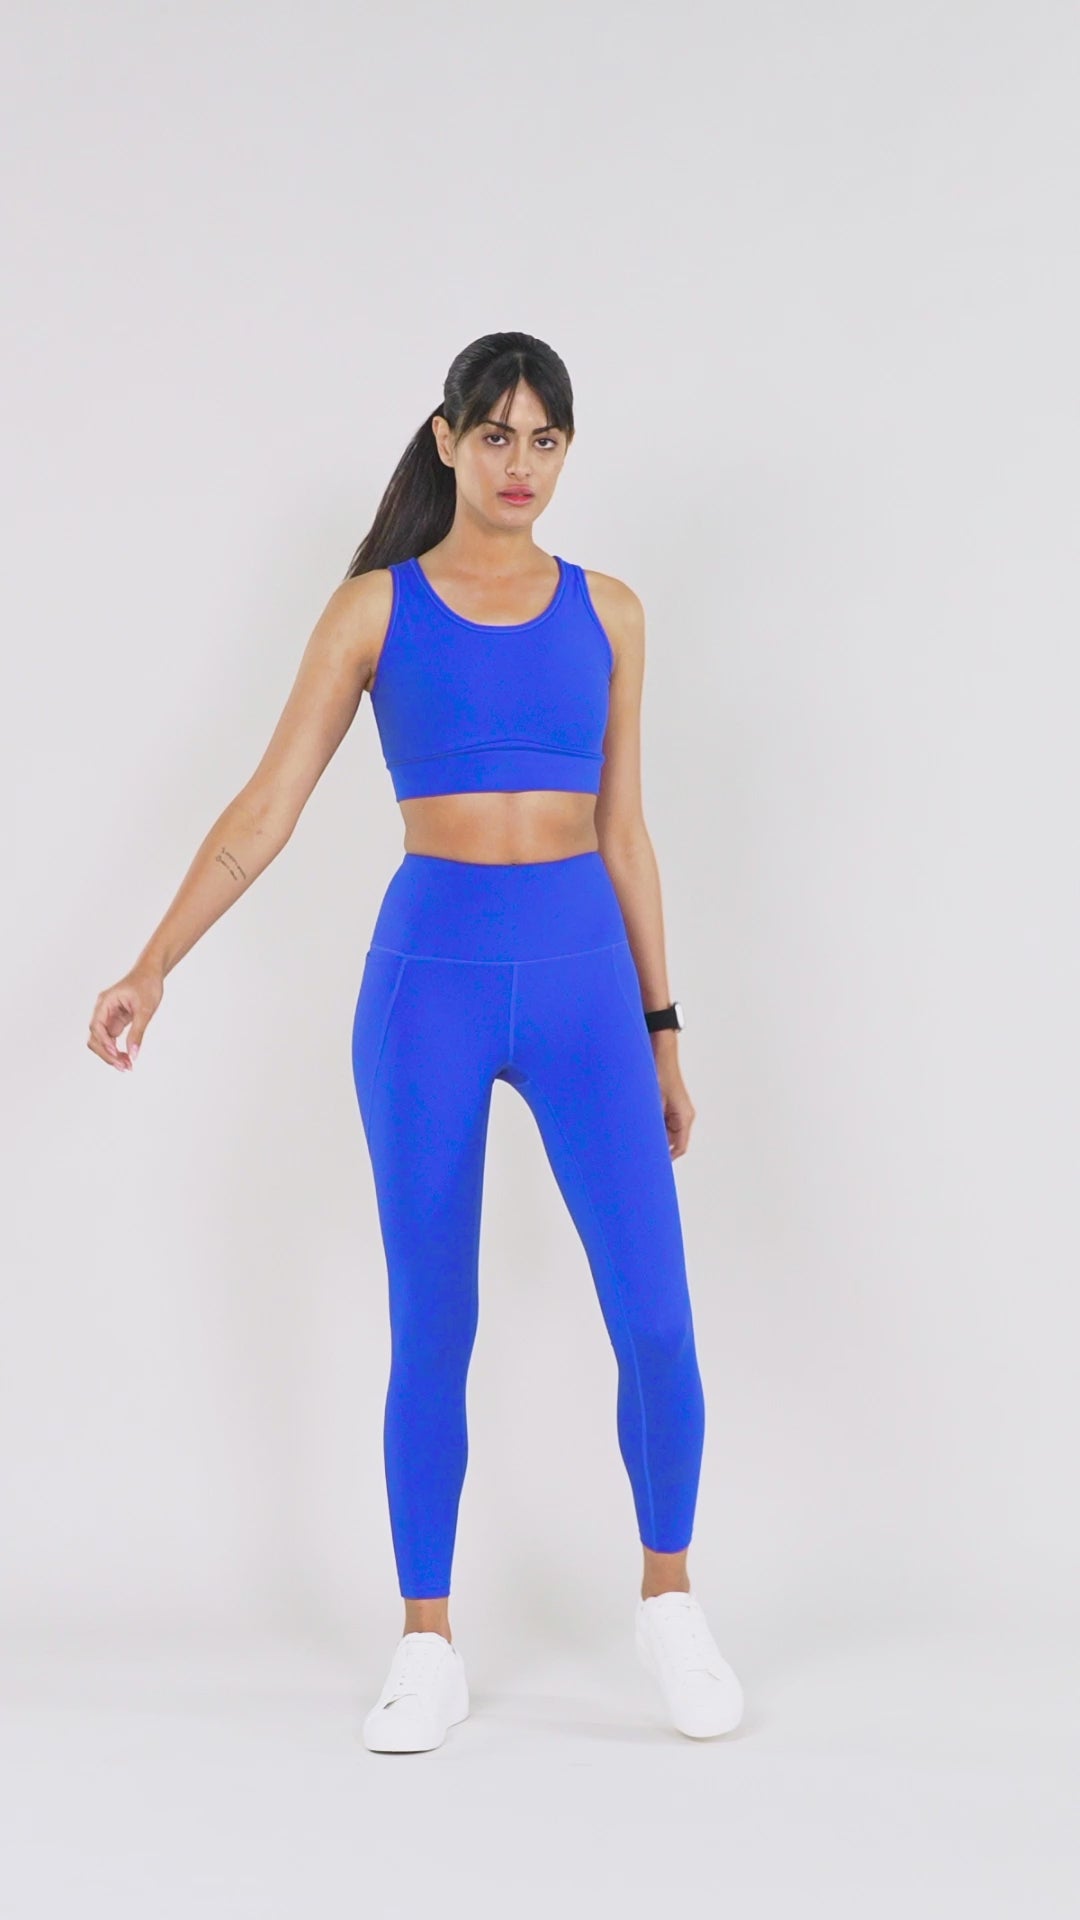 Top more than 175 cobalt blue workout leggings